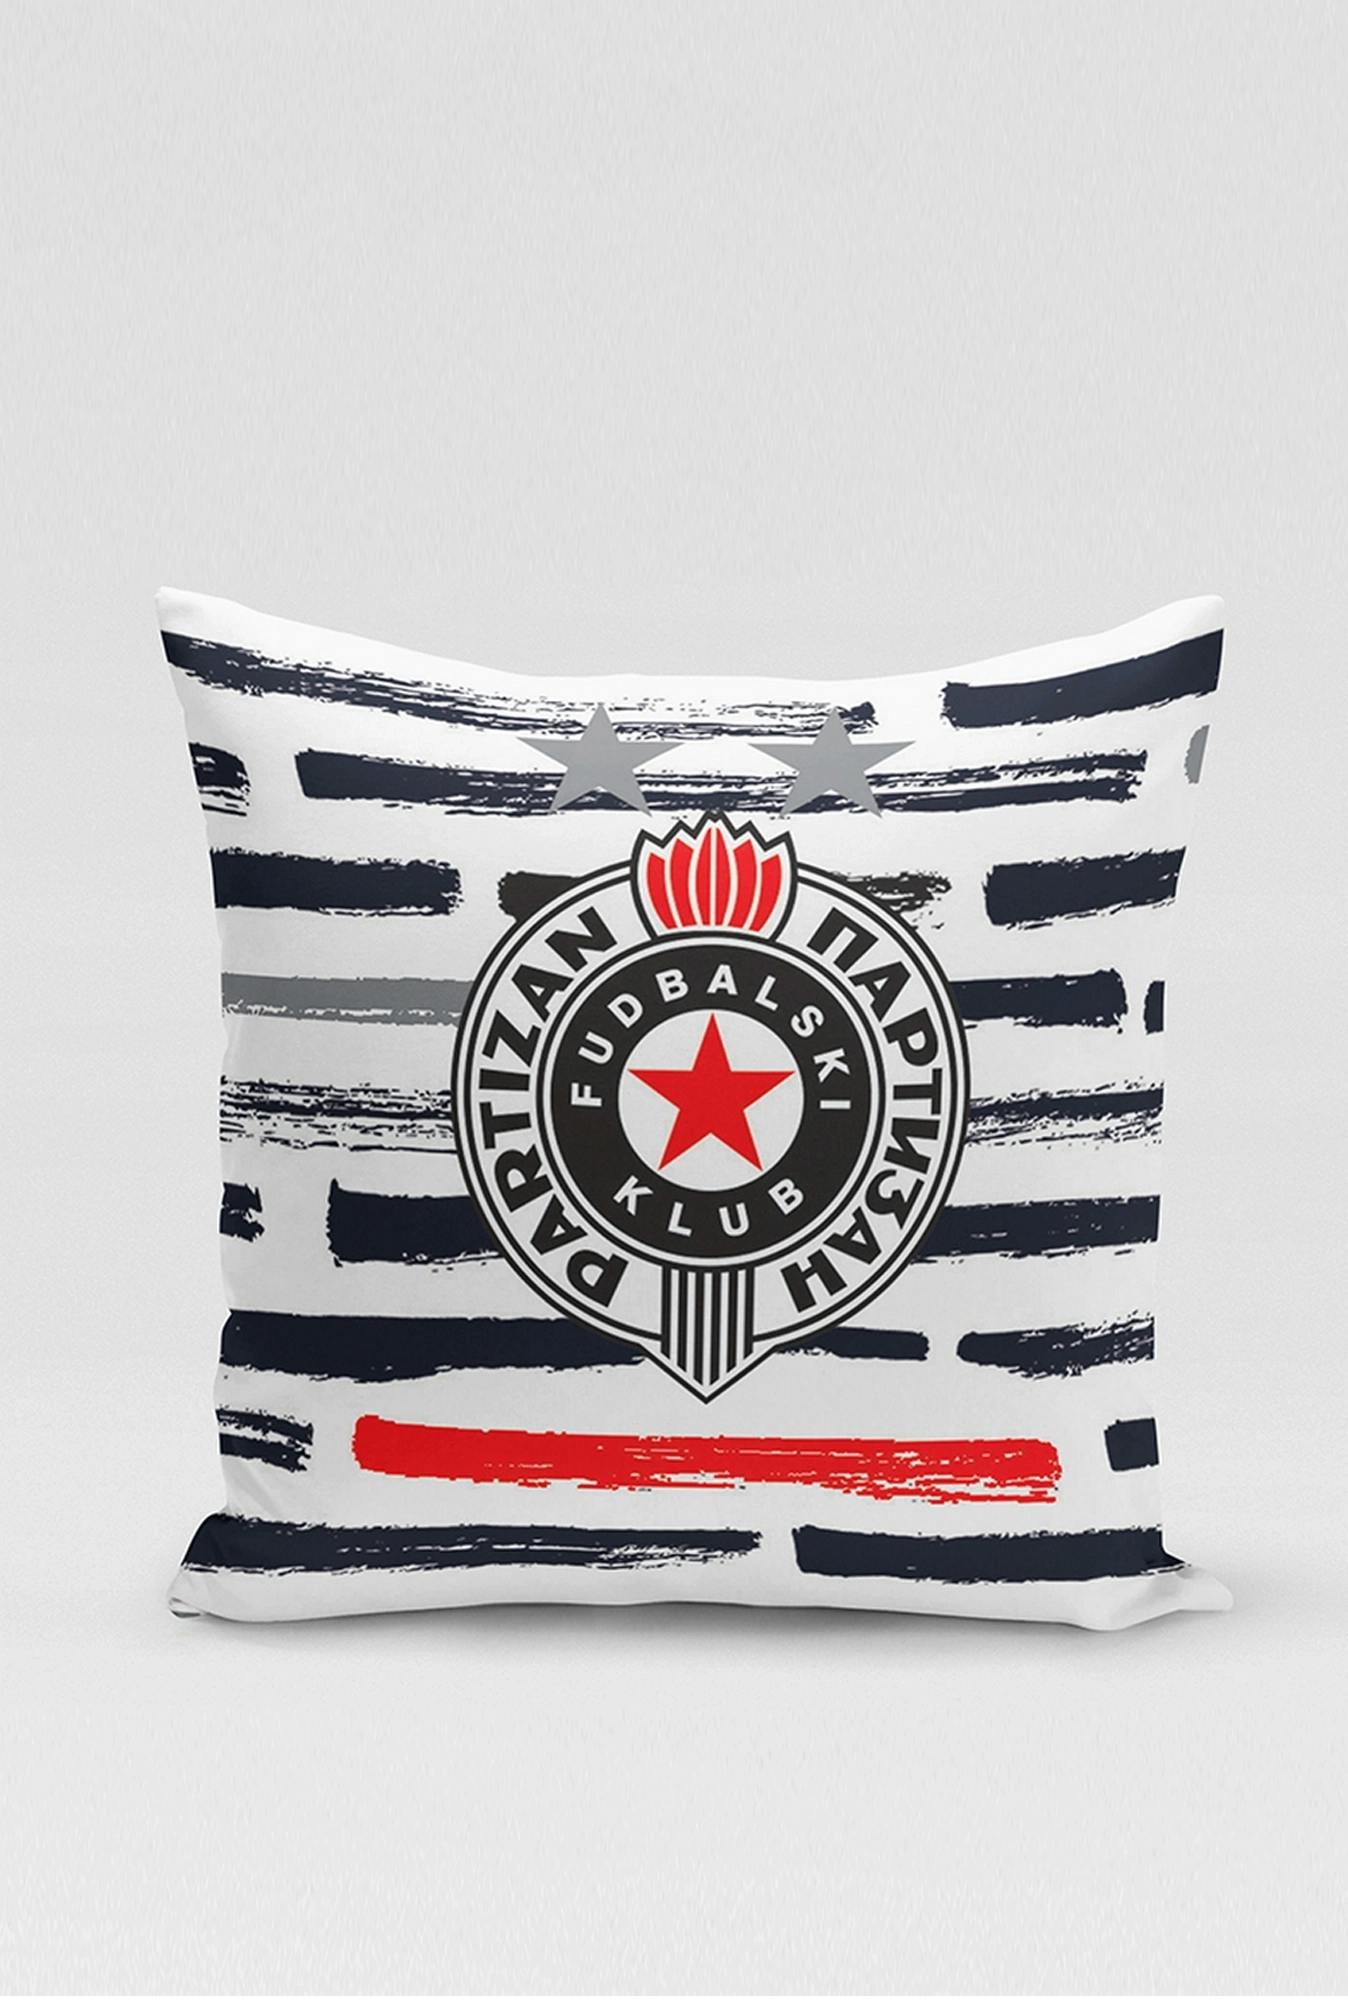 Ukrasni jastučić Partizan linija